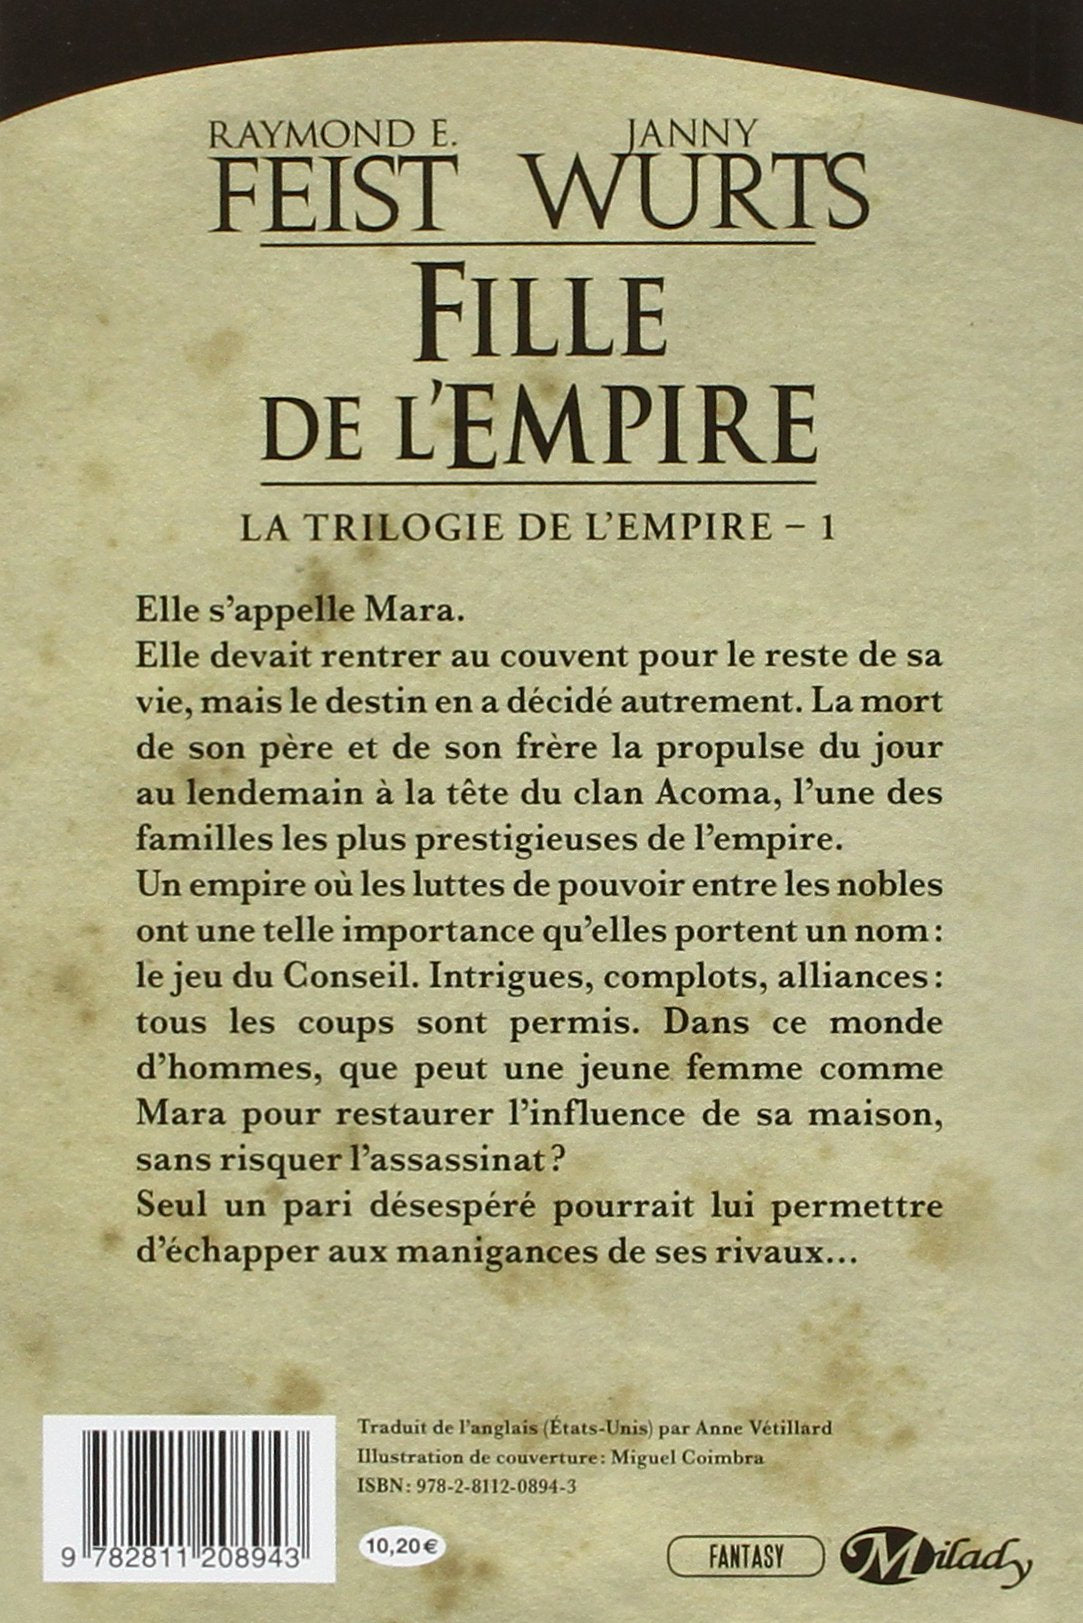 La trilogie de l'empire # 1 : Fille de l'empire (Raymond E. Feist)